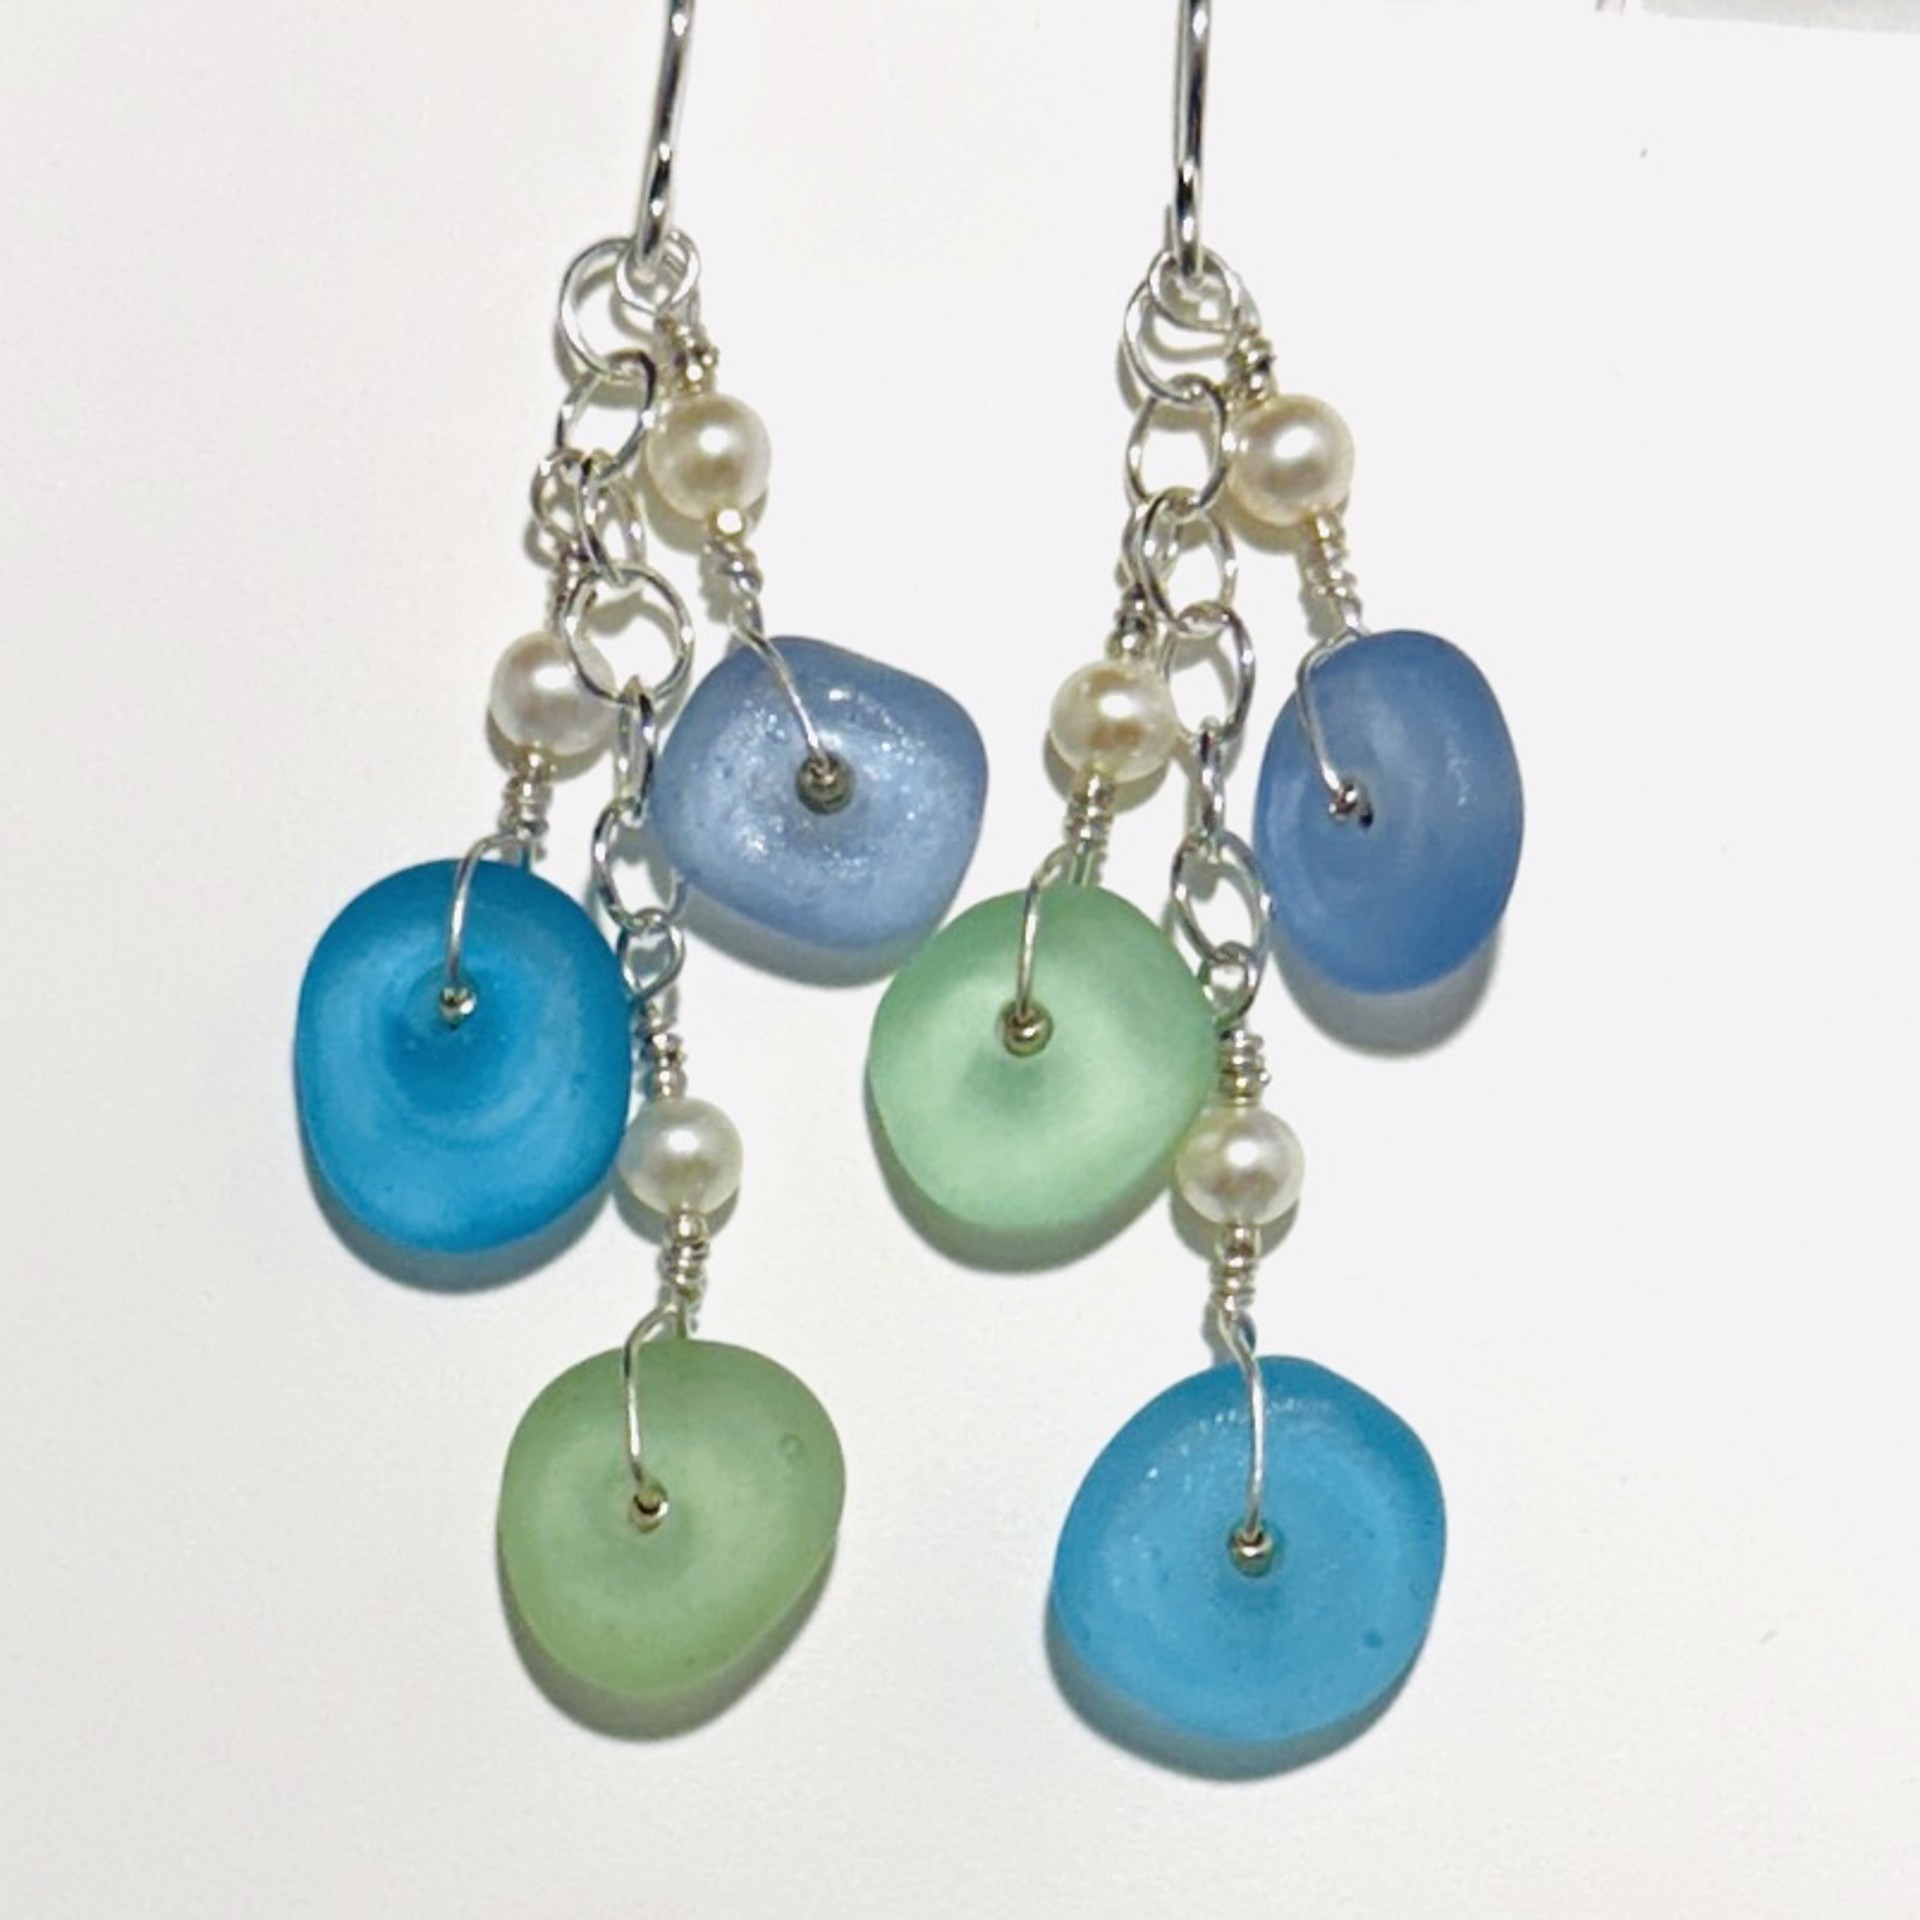 “Sea Glass”, Pearl Earrings LS24-73 by Linda Sacra